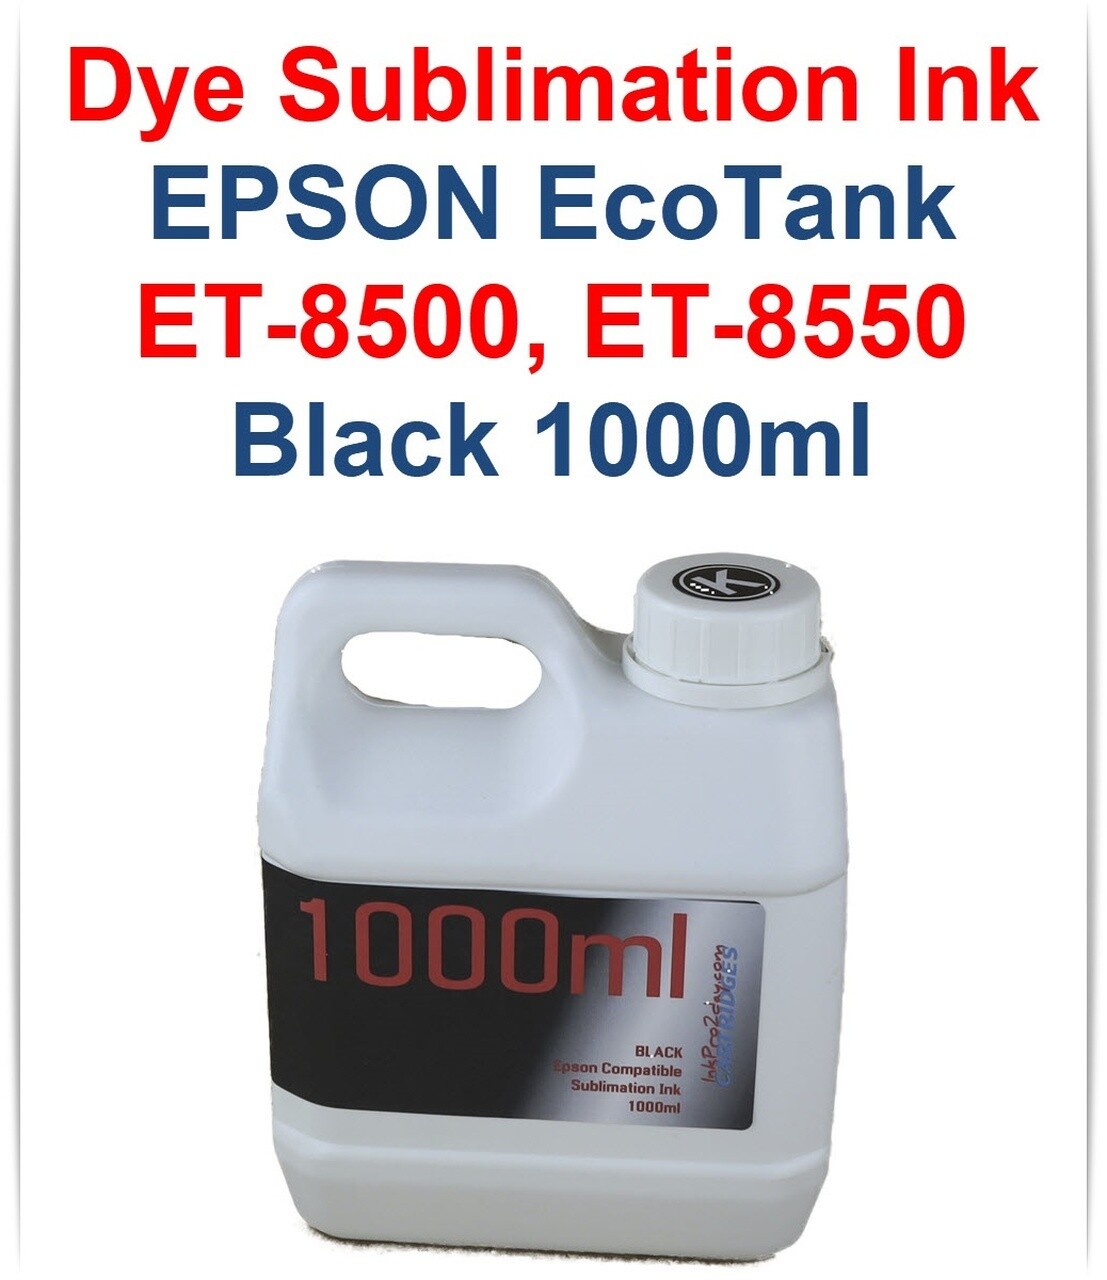 Black Dye Sublimation Ink 1000ml bottle for EPSON EcoTank ET-8500 ET-8550 printers